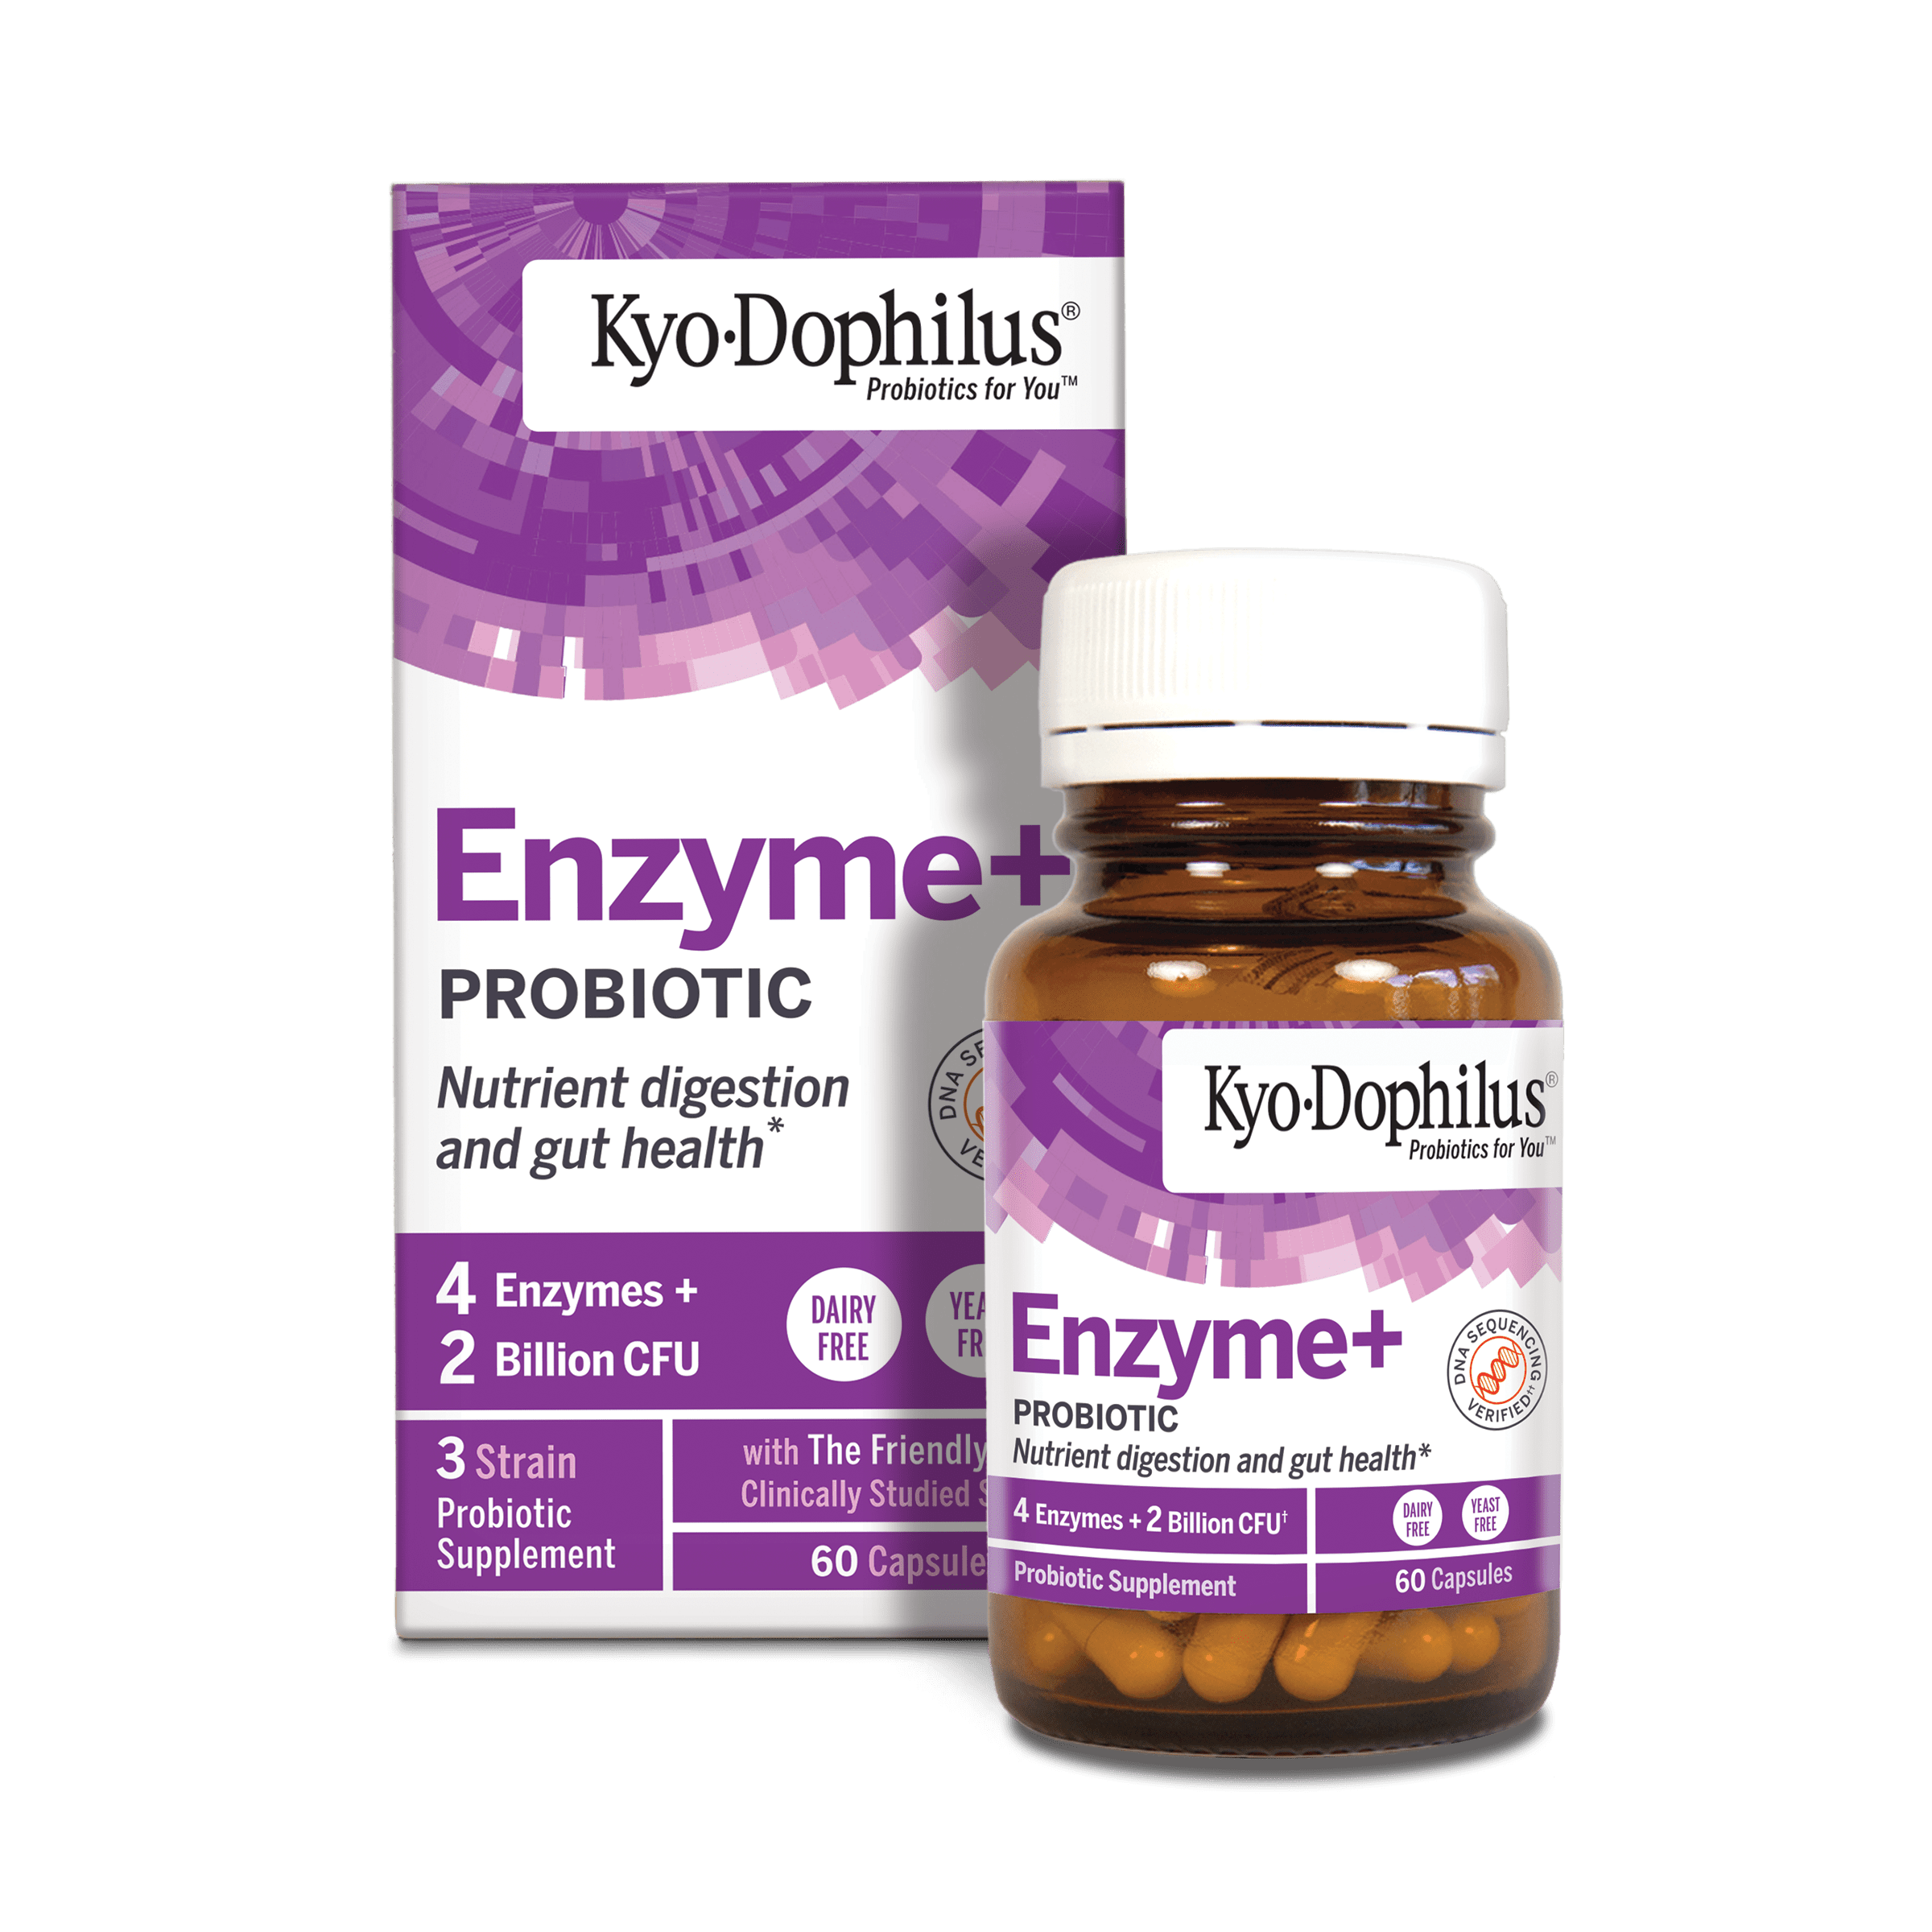 Kyo-Dophilus® Enzyme+ Probiotic